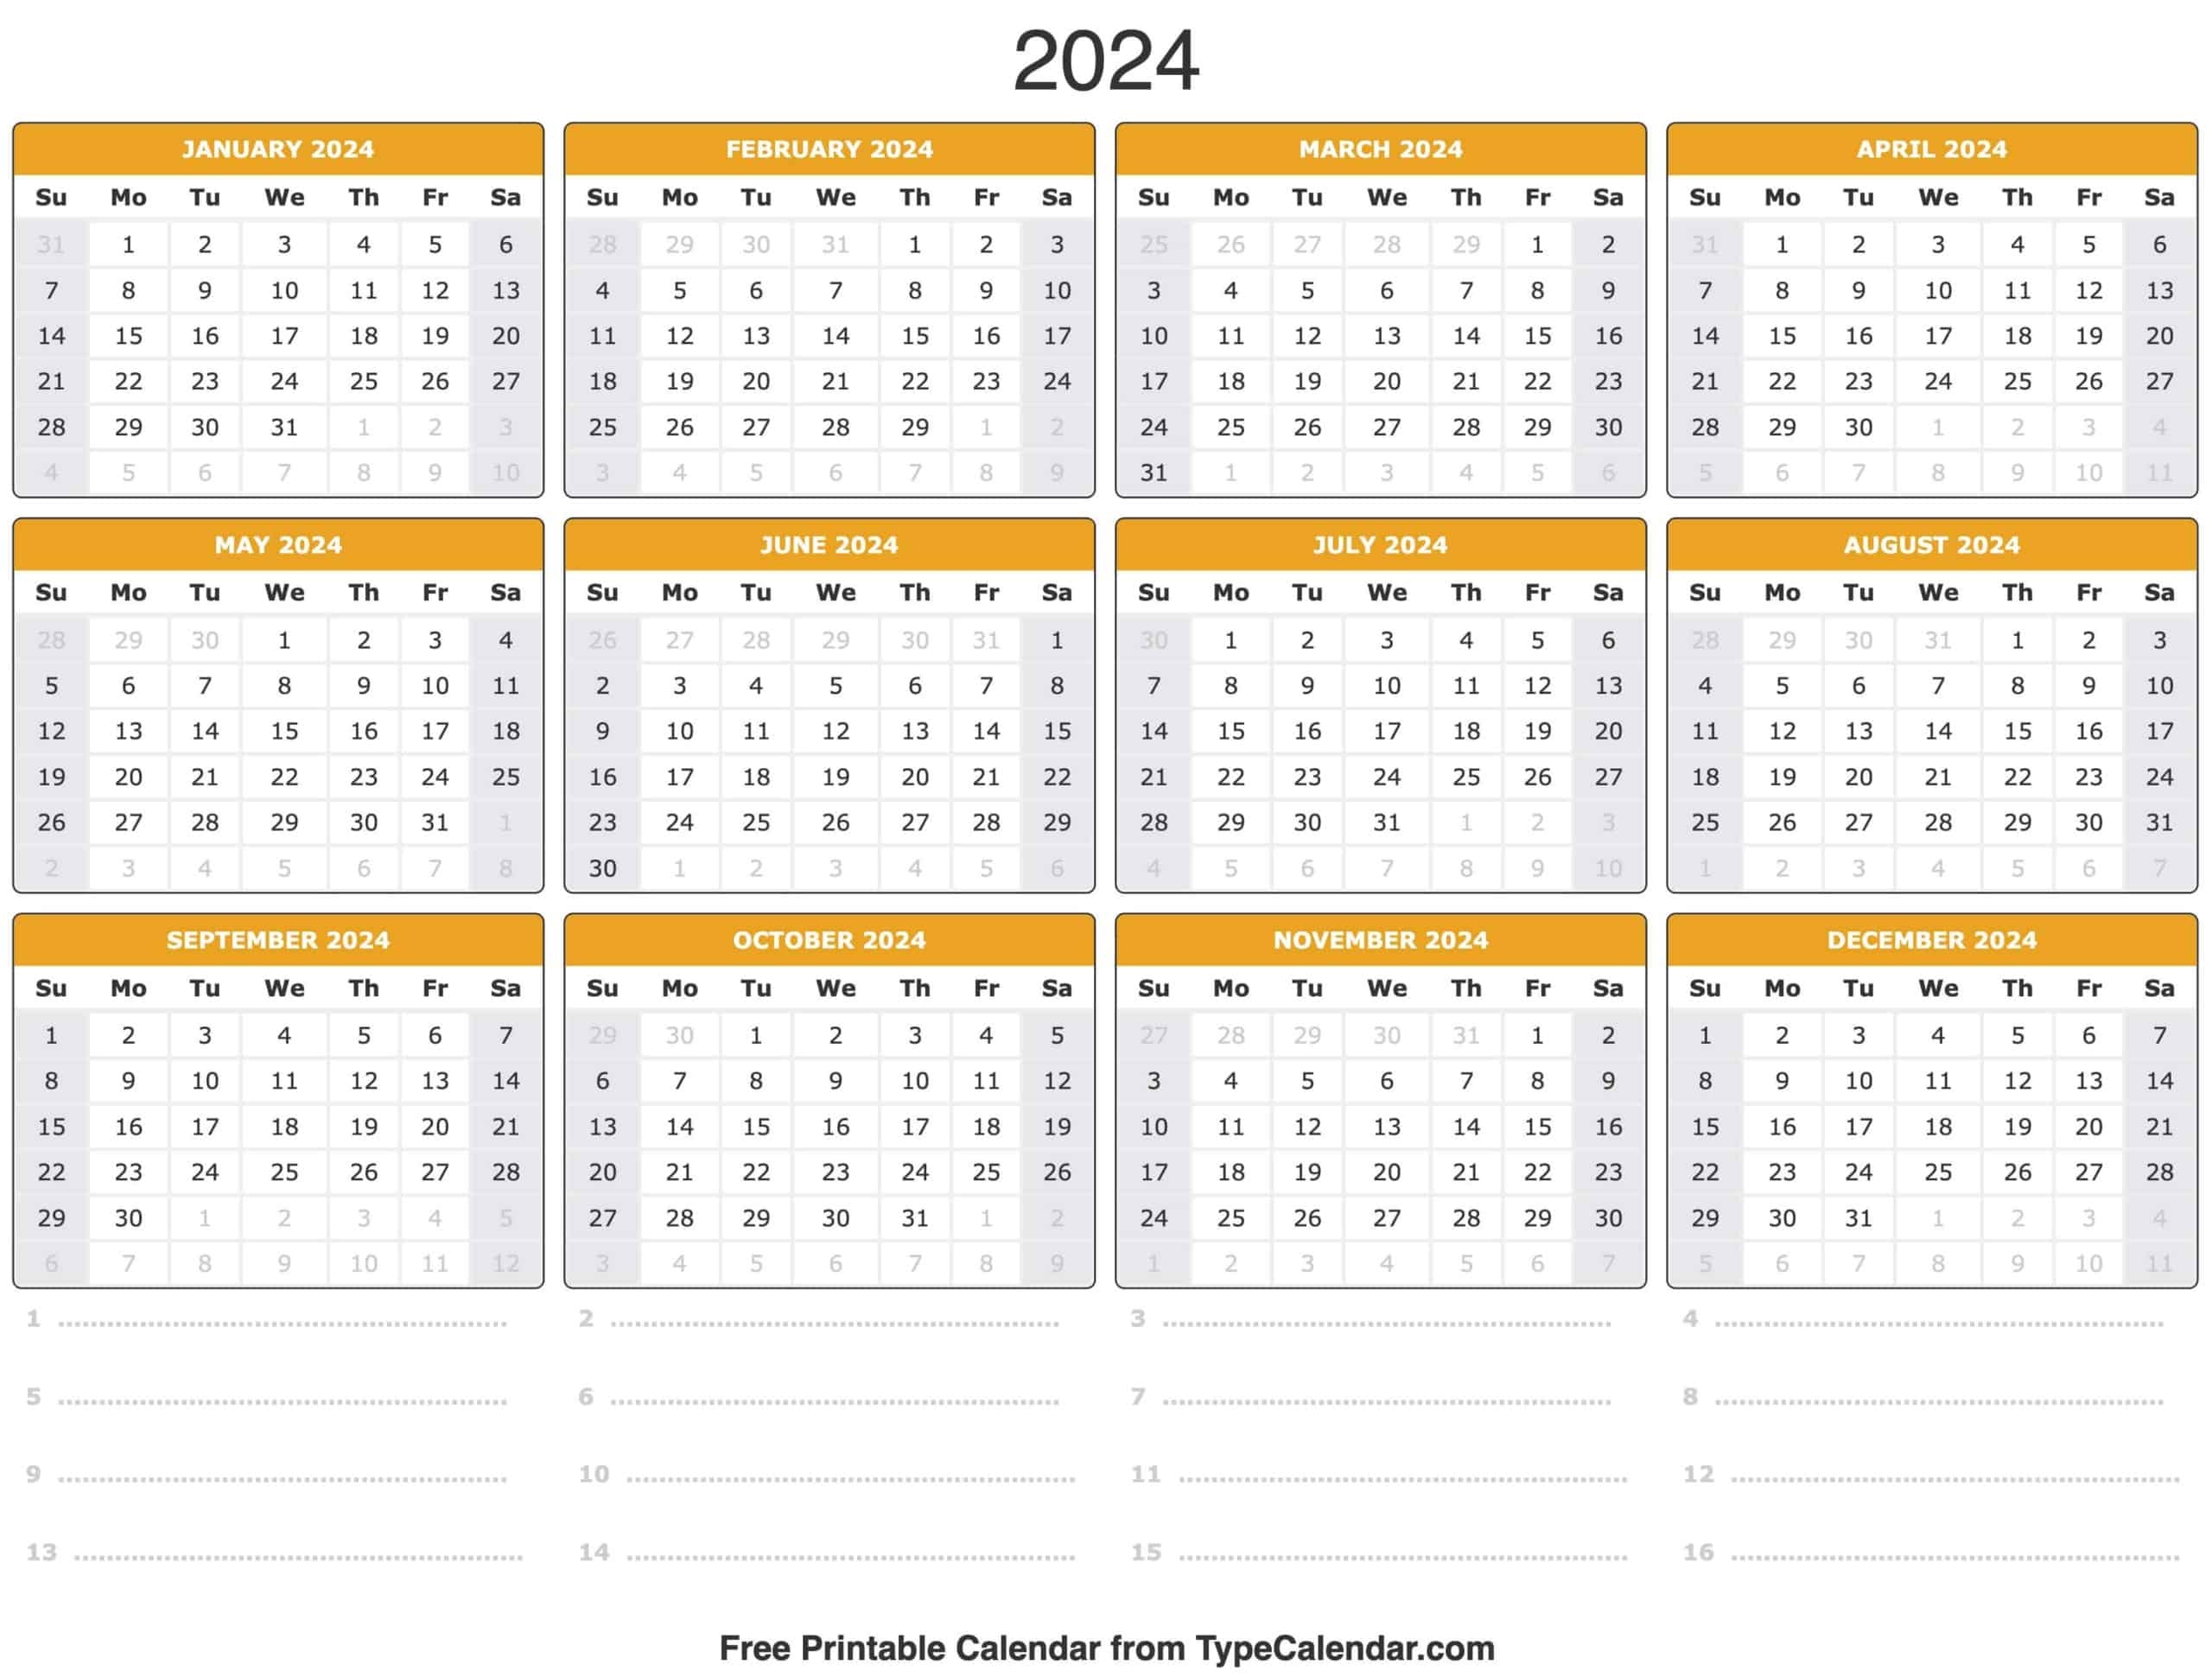 2024 Calendar: Free Printable Calendar With Holidays pertaining to Free Printable Calendar 2024 With Grid Lines